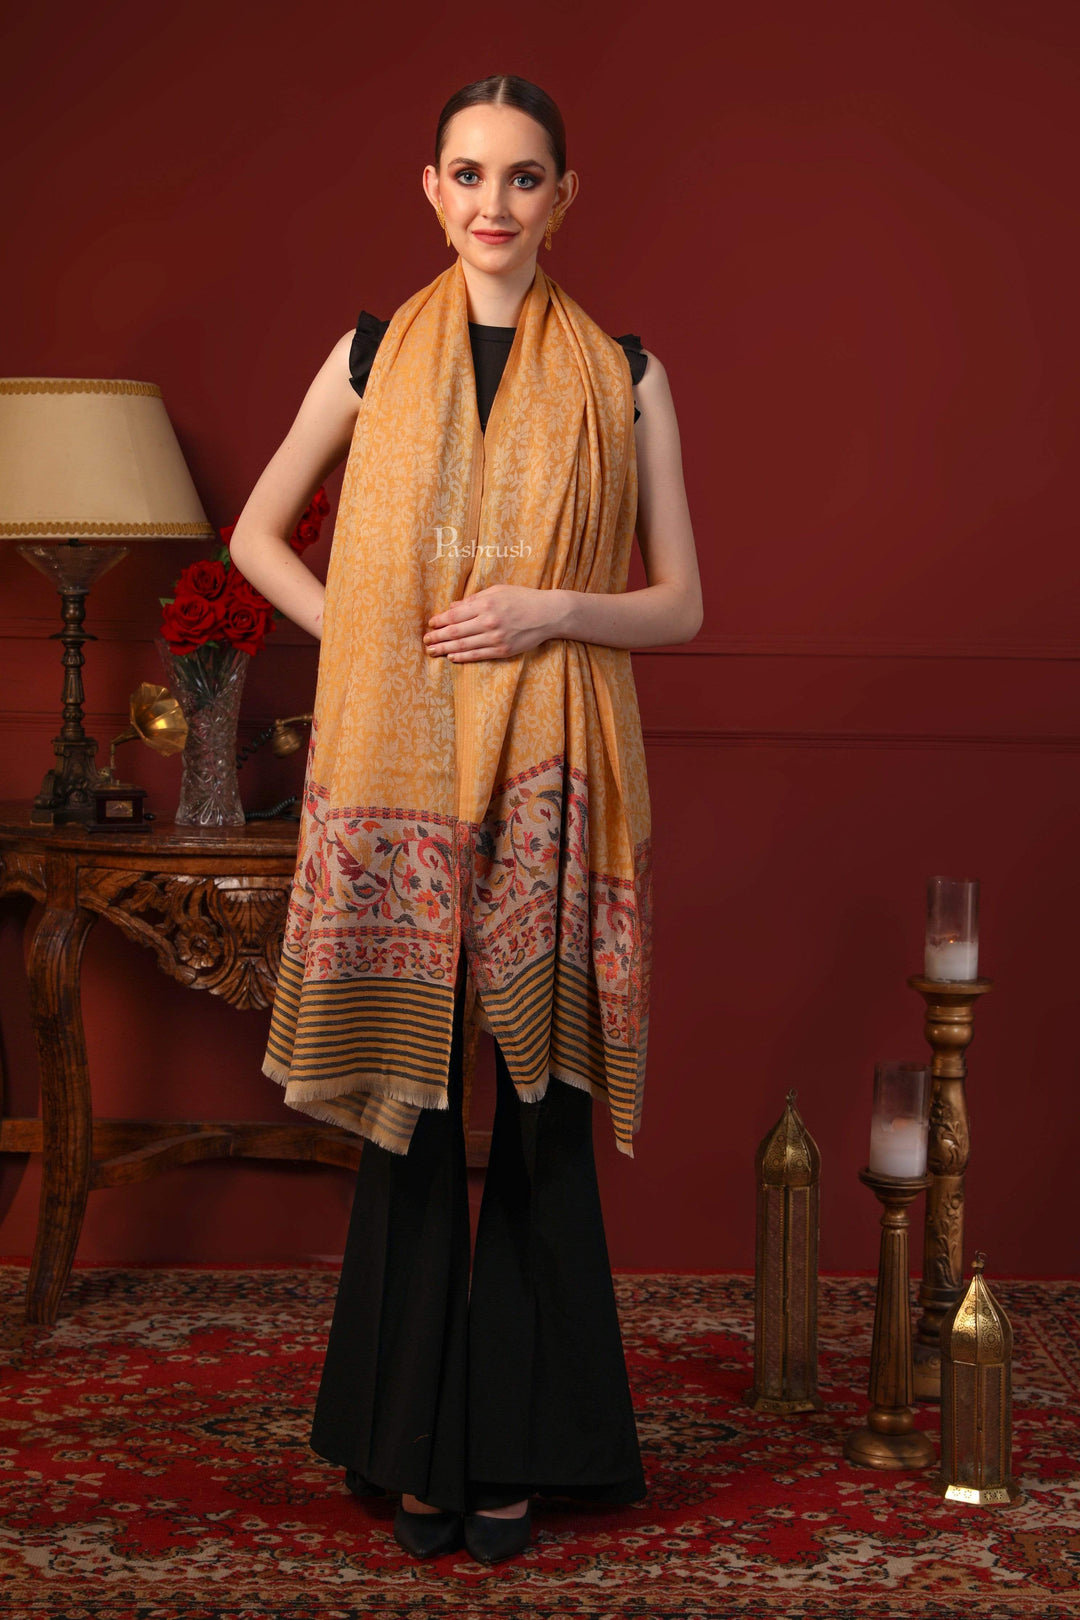 Pashtush India 100x200 Pashtush Women's Soft Wool Cashmere Blended Shawl, Ethnic Palla